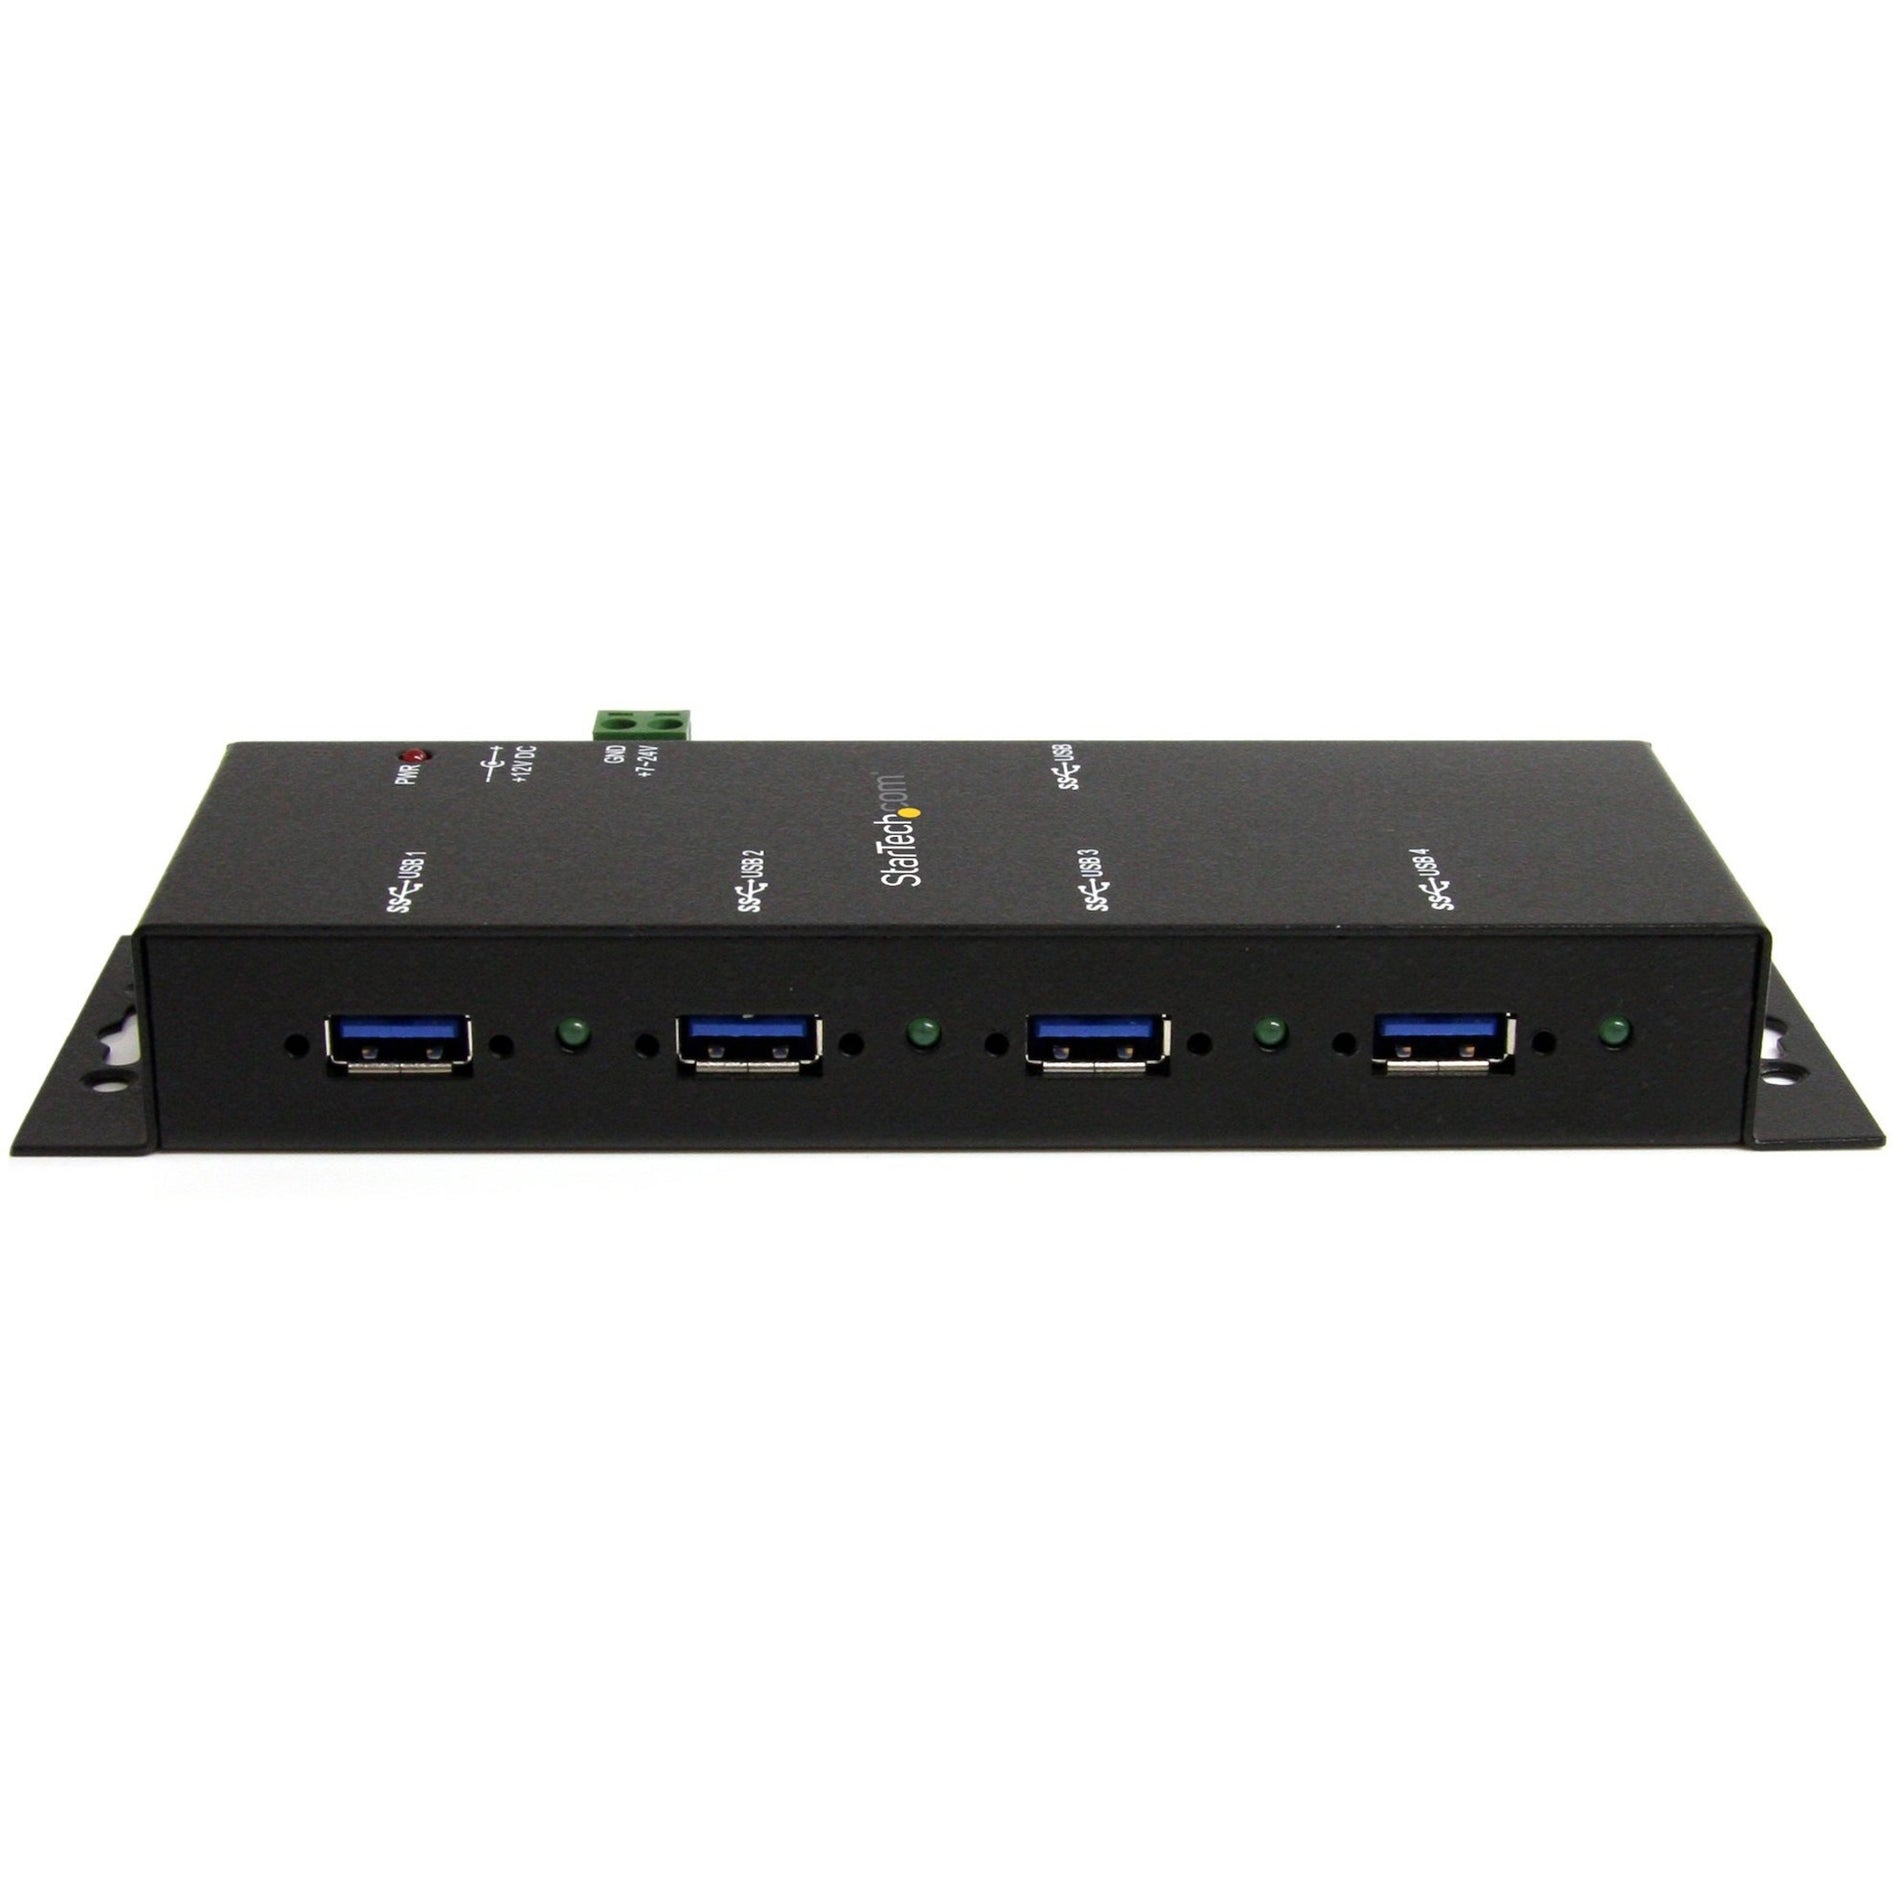 StarTech.com ST4300USBM 4 Port Industrial USB 3.0 Hub - Mountable, Rugged USB Hub